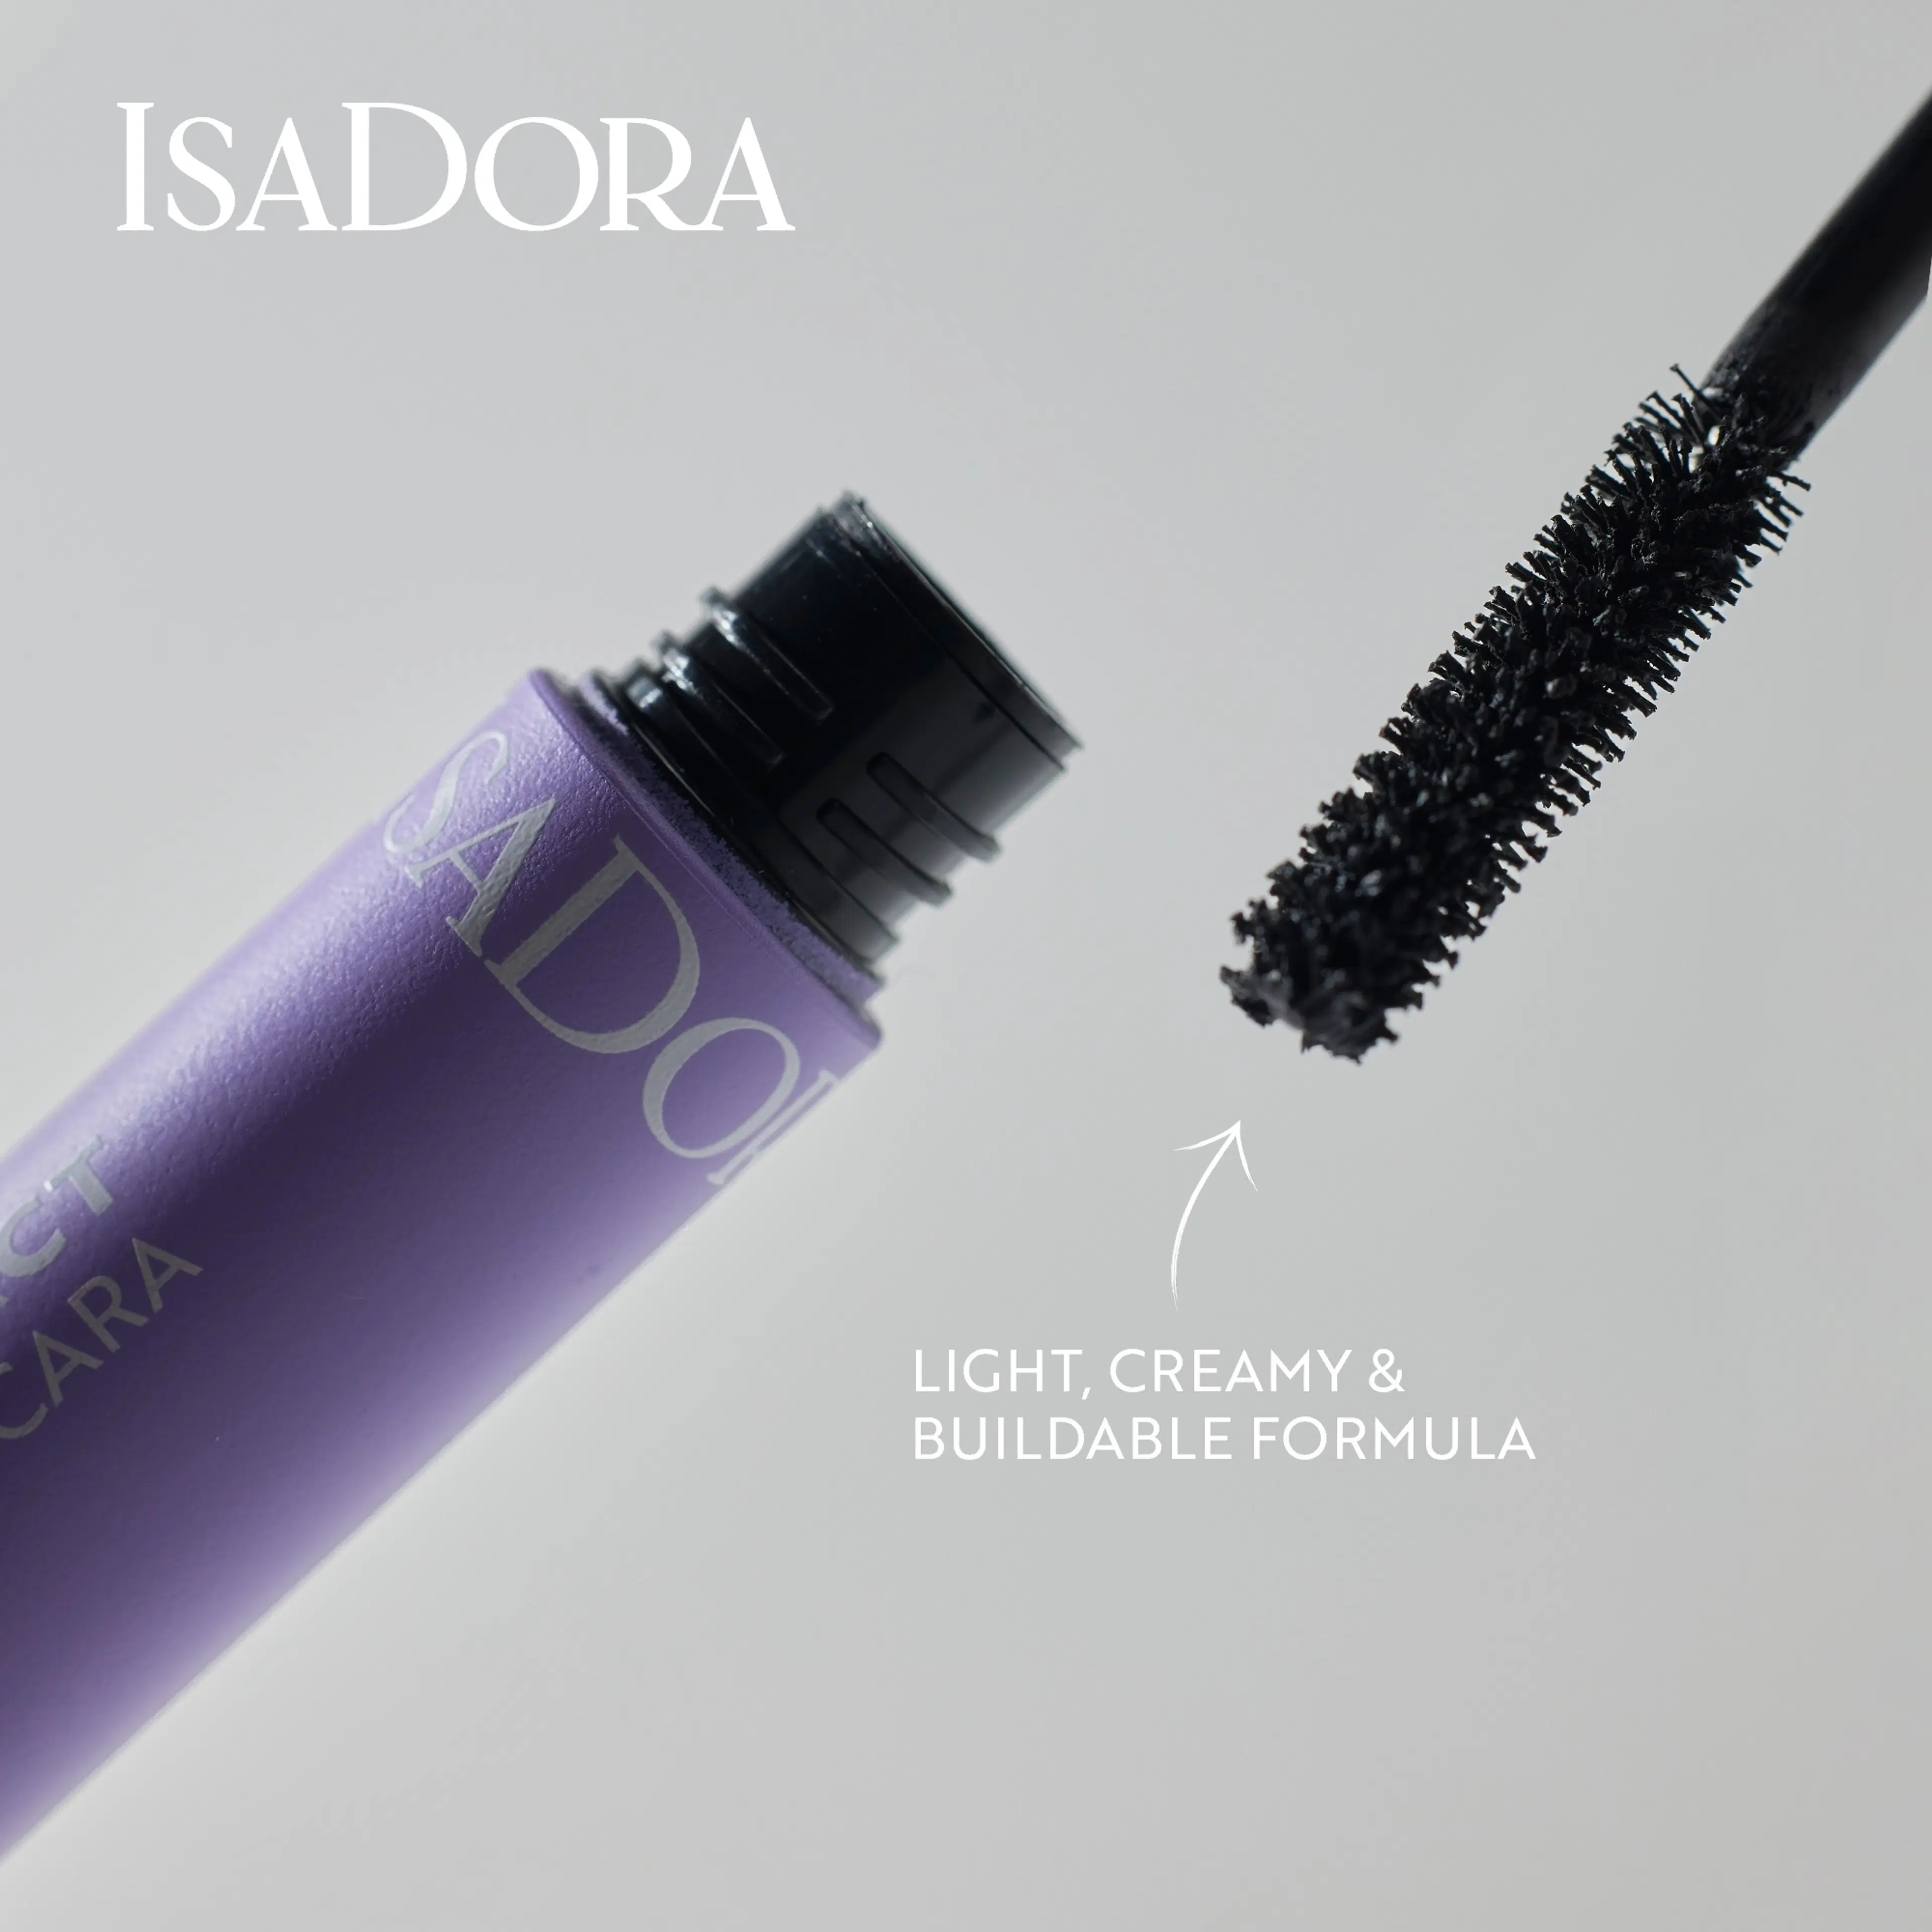 IsaDora High Impact Lift & Curl Mascara 9 ml